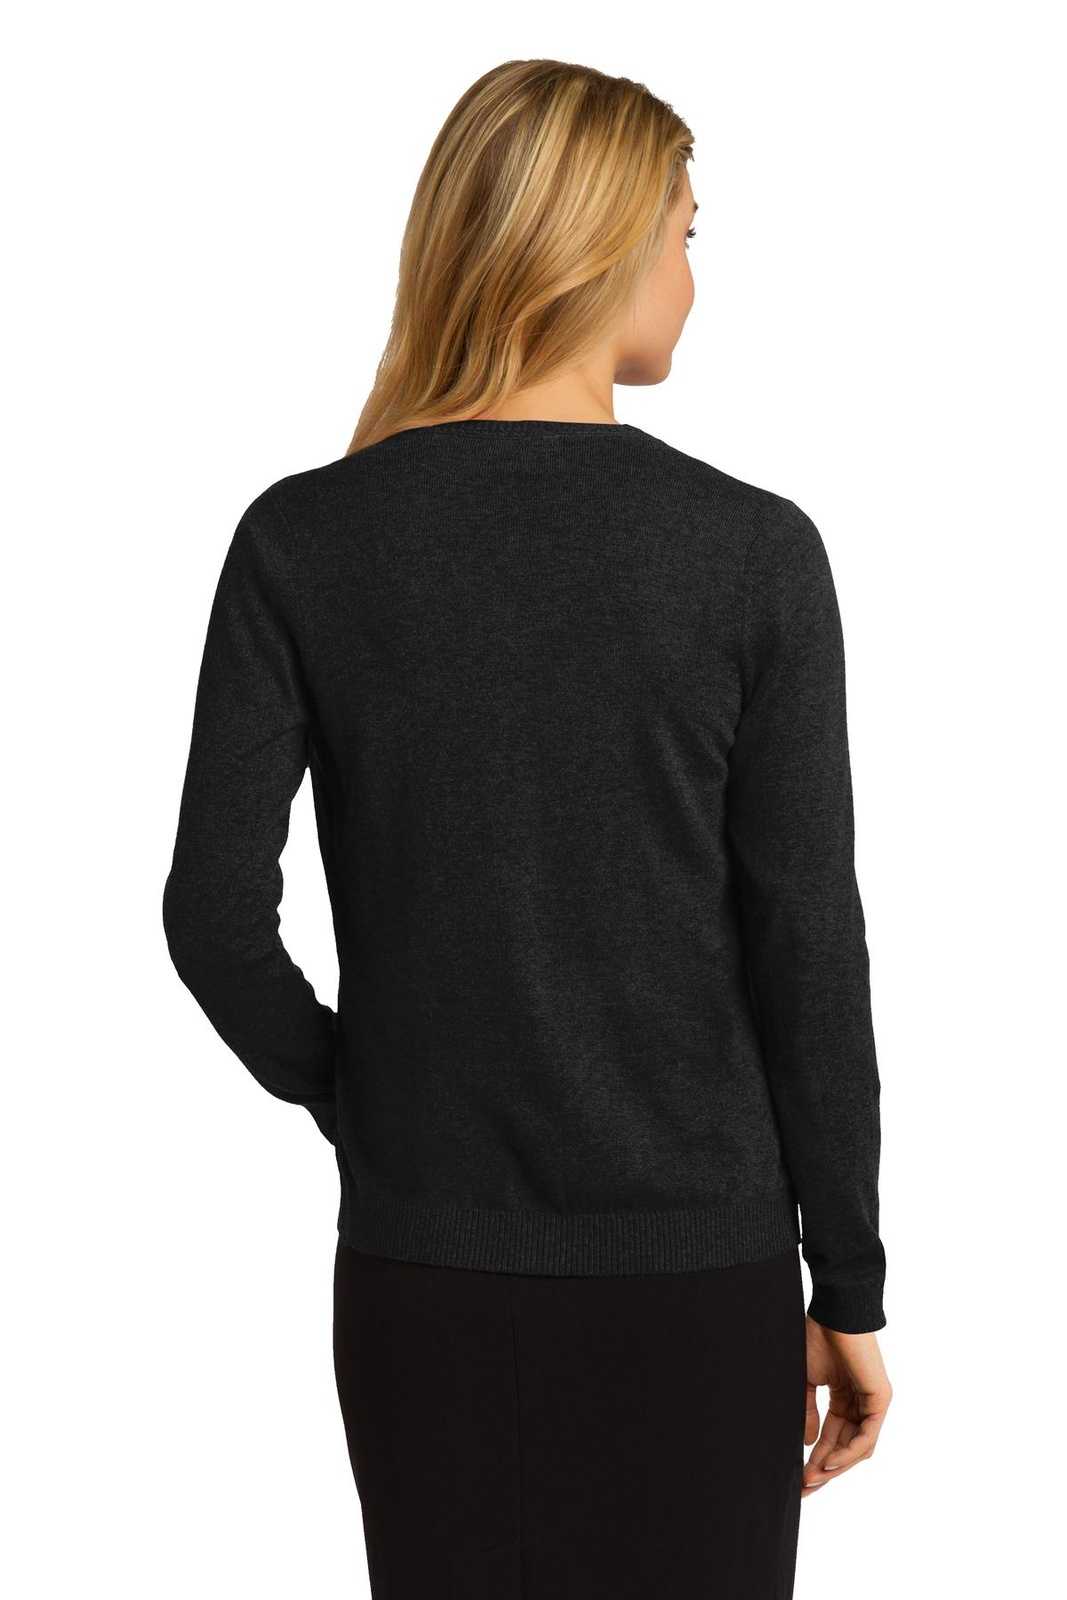 Port Authority LSW287 Ladies Cardigan Sweater - Black - HIT a Double - 1